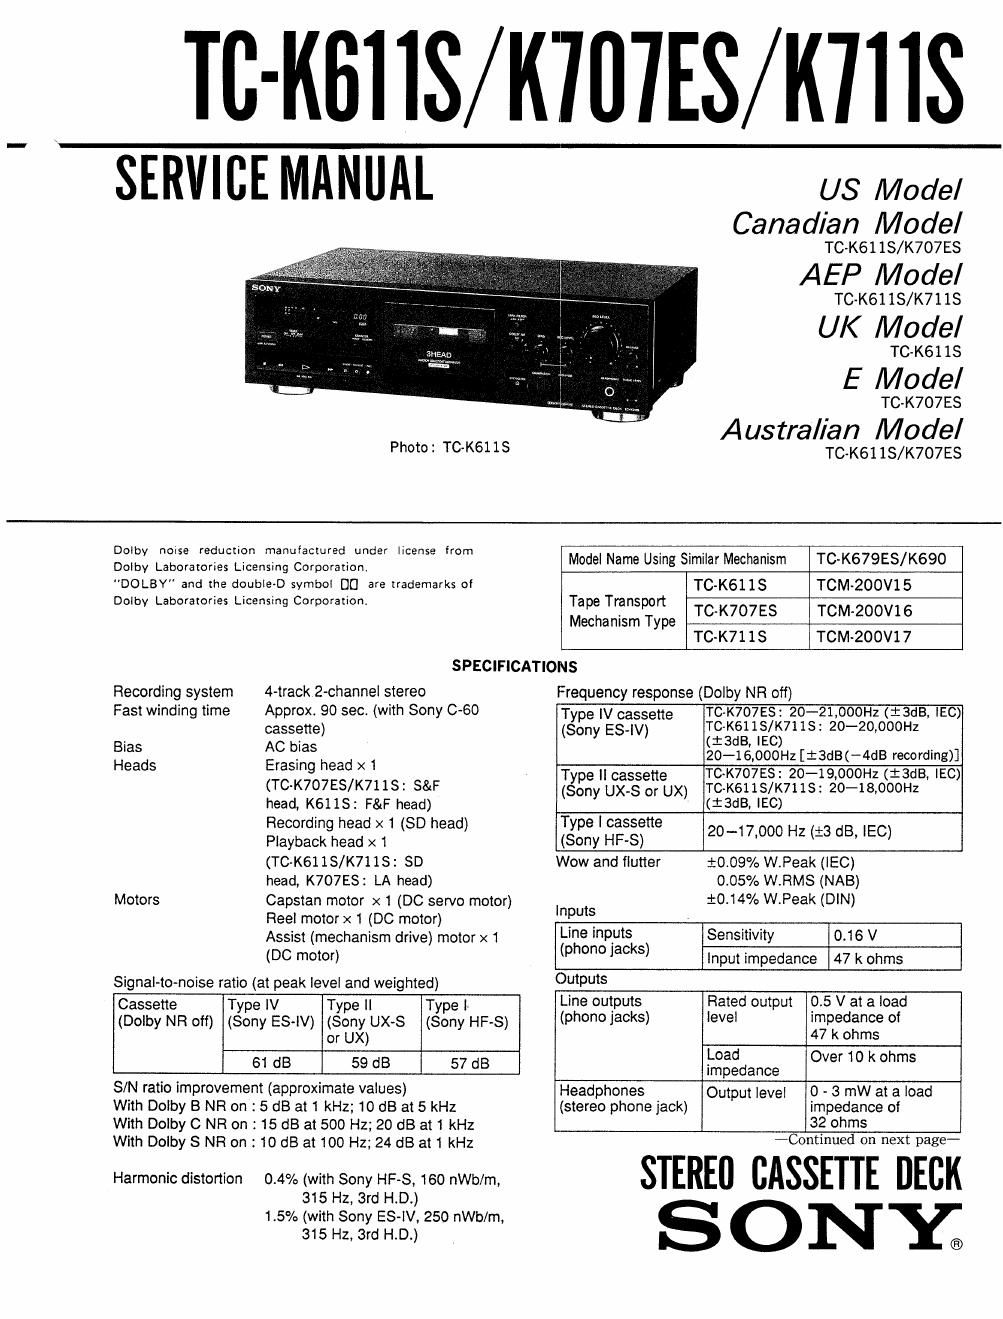 sony tc k 707 es service manual